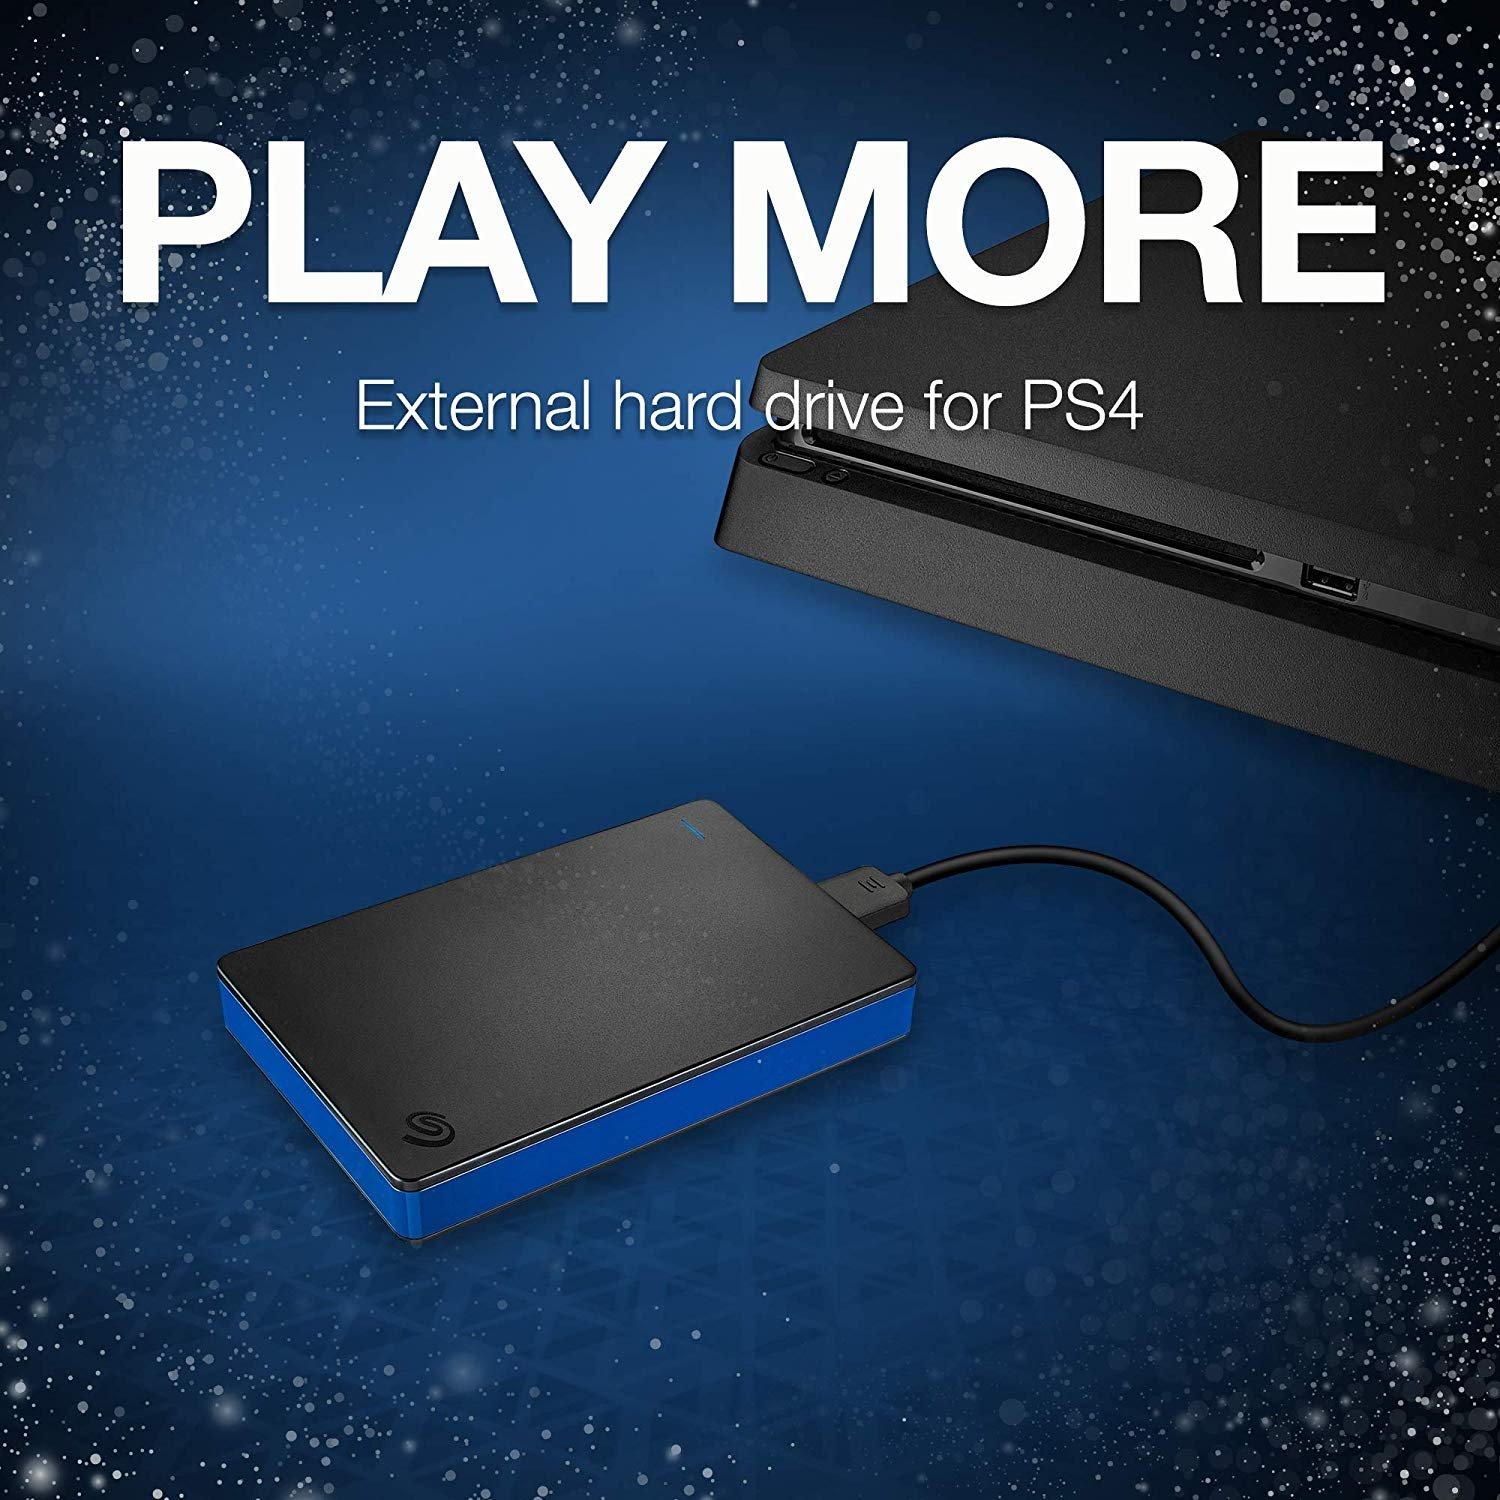 ps4 external hard drive gamestop